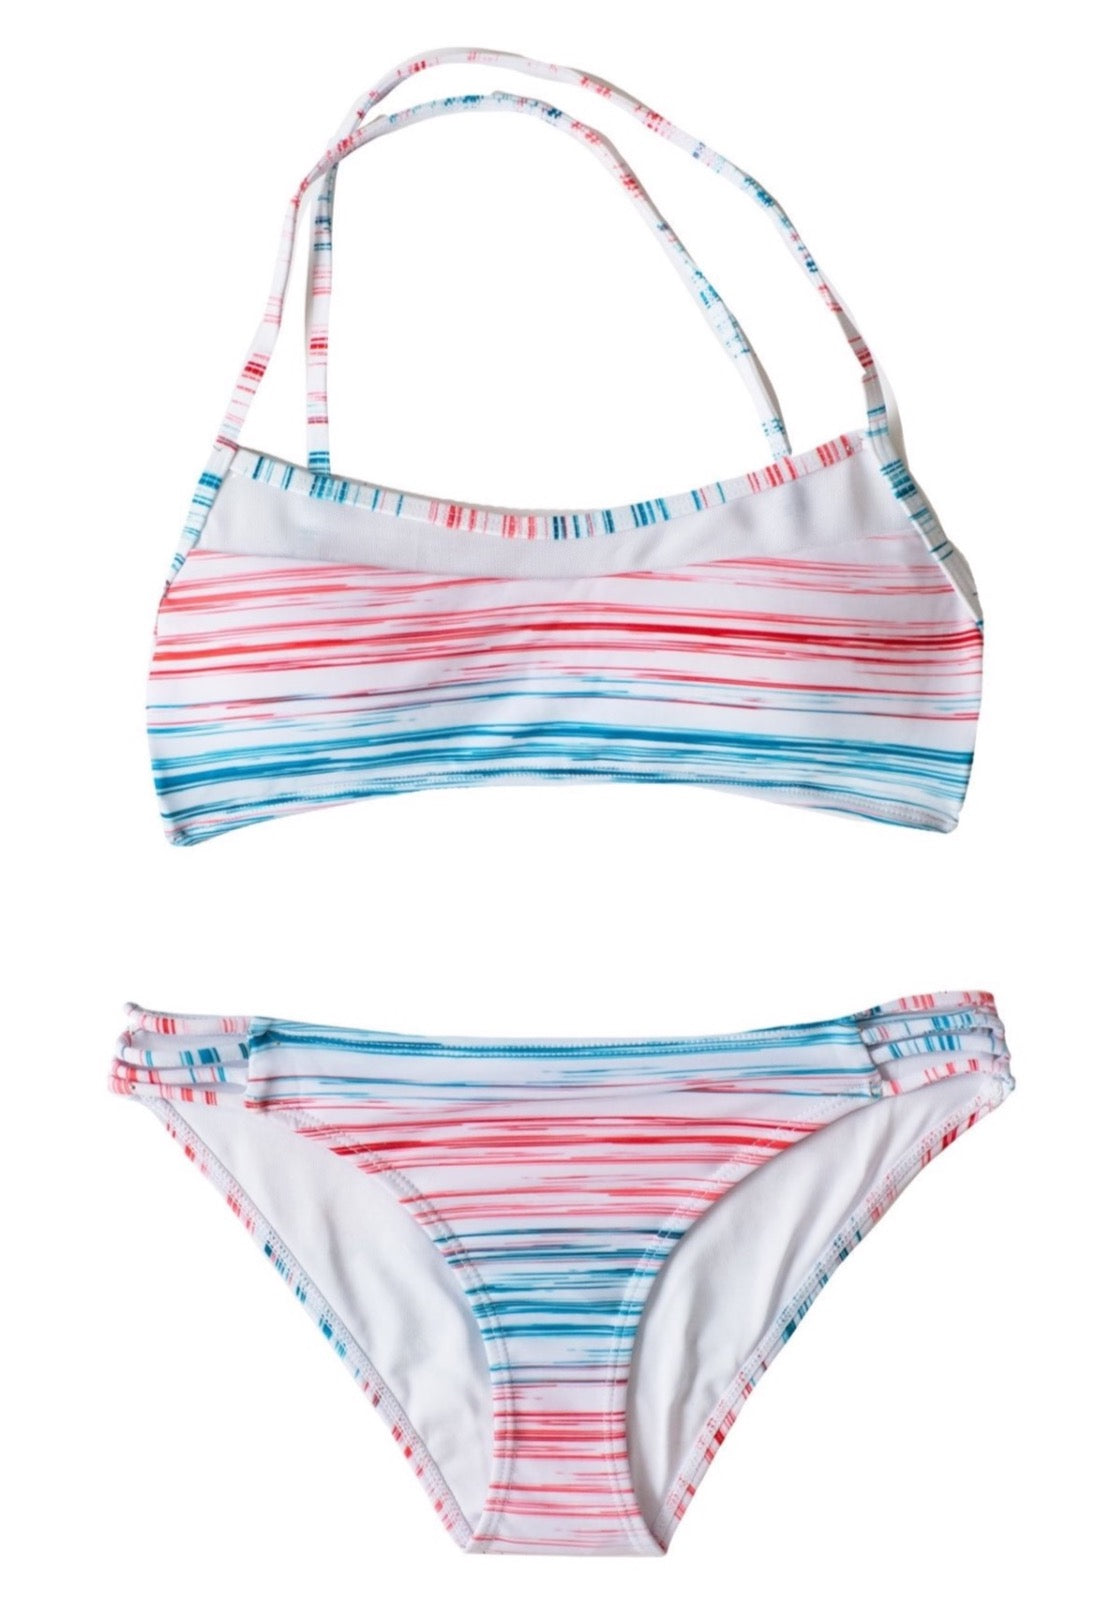 Sunset Beach Bikini SET - Striped Cross Back Scoop + Bottoms Youth 8 10 12 14 2 Piece Bikini Set Chance Loves Swim 8 White 